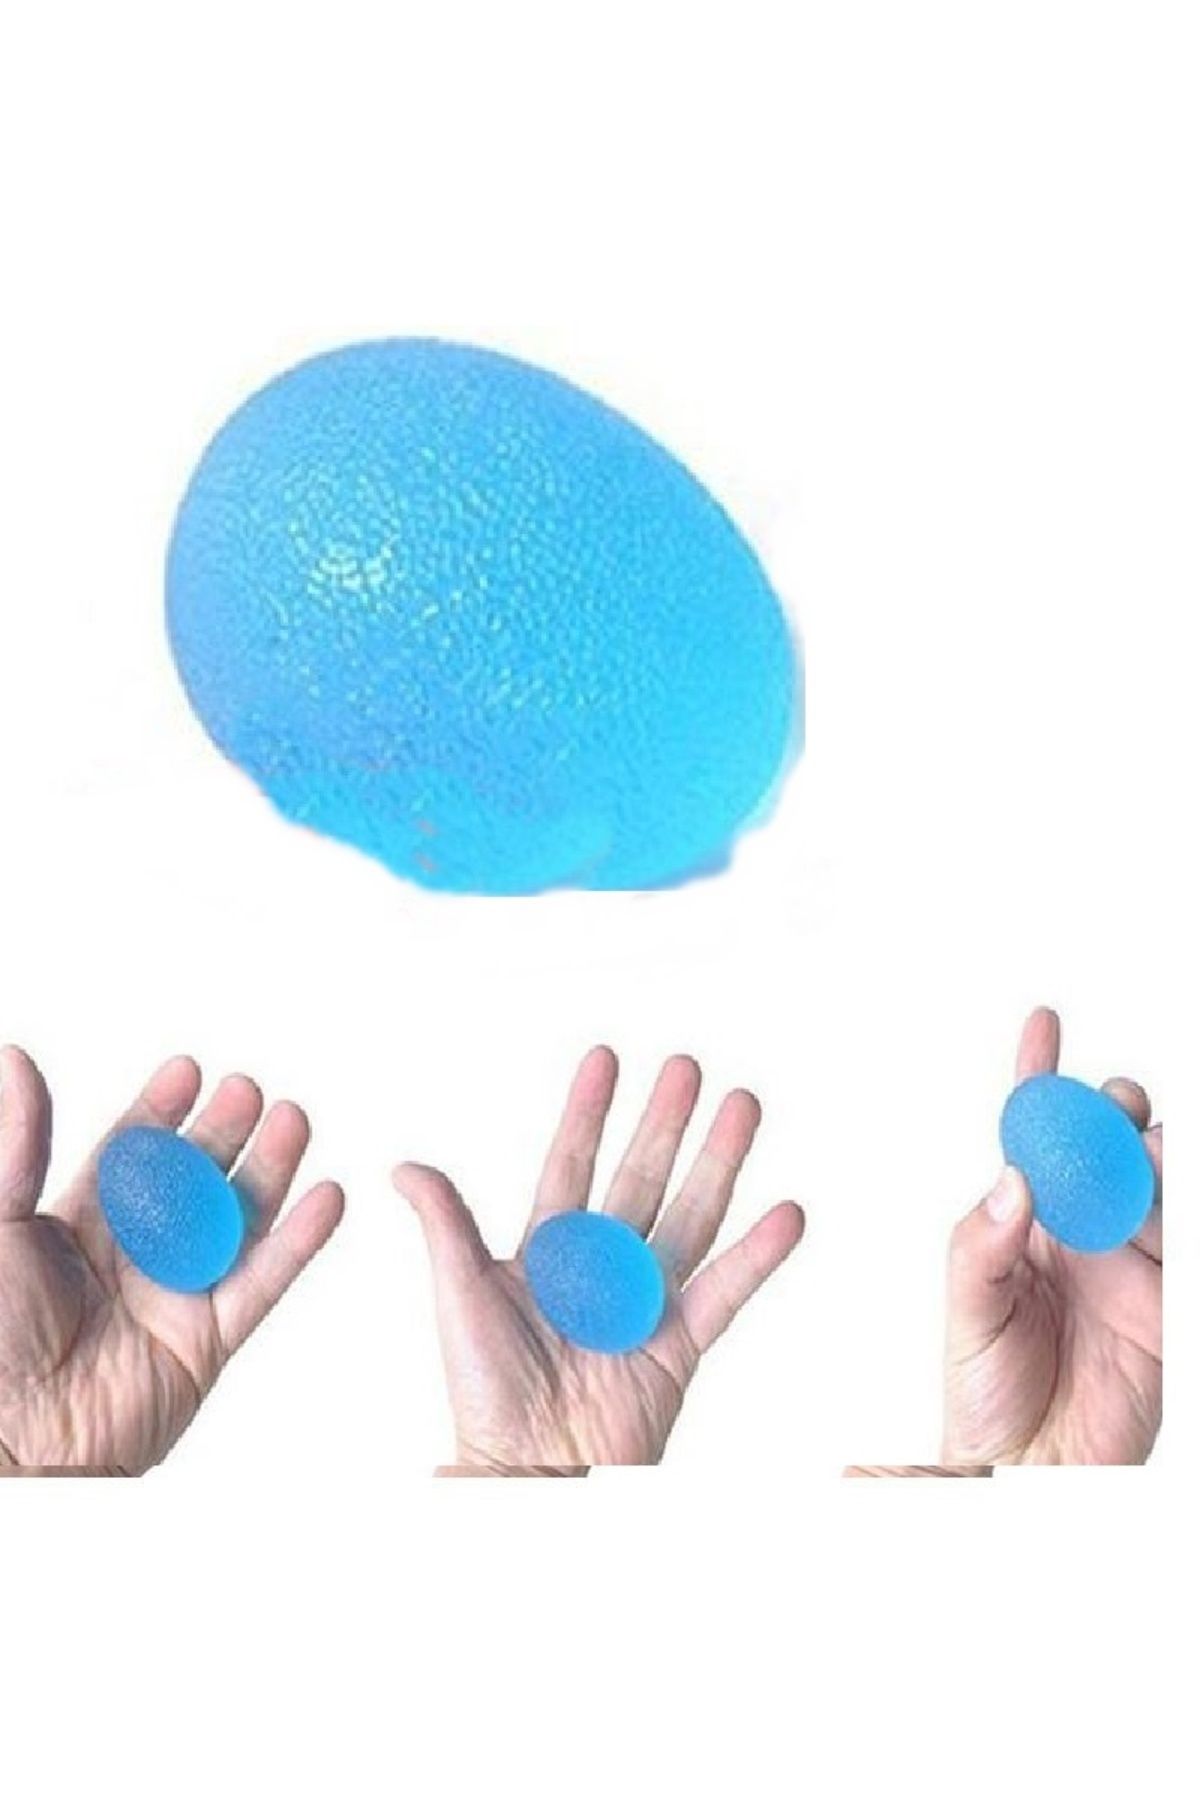 DEPPOSITE Yumurta Top - Silikon El Egzersiz Topu Mavi- Sert